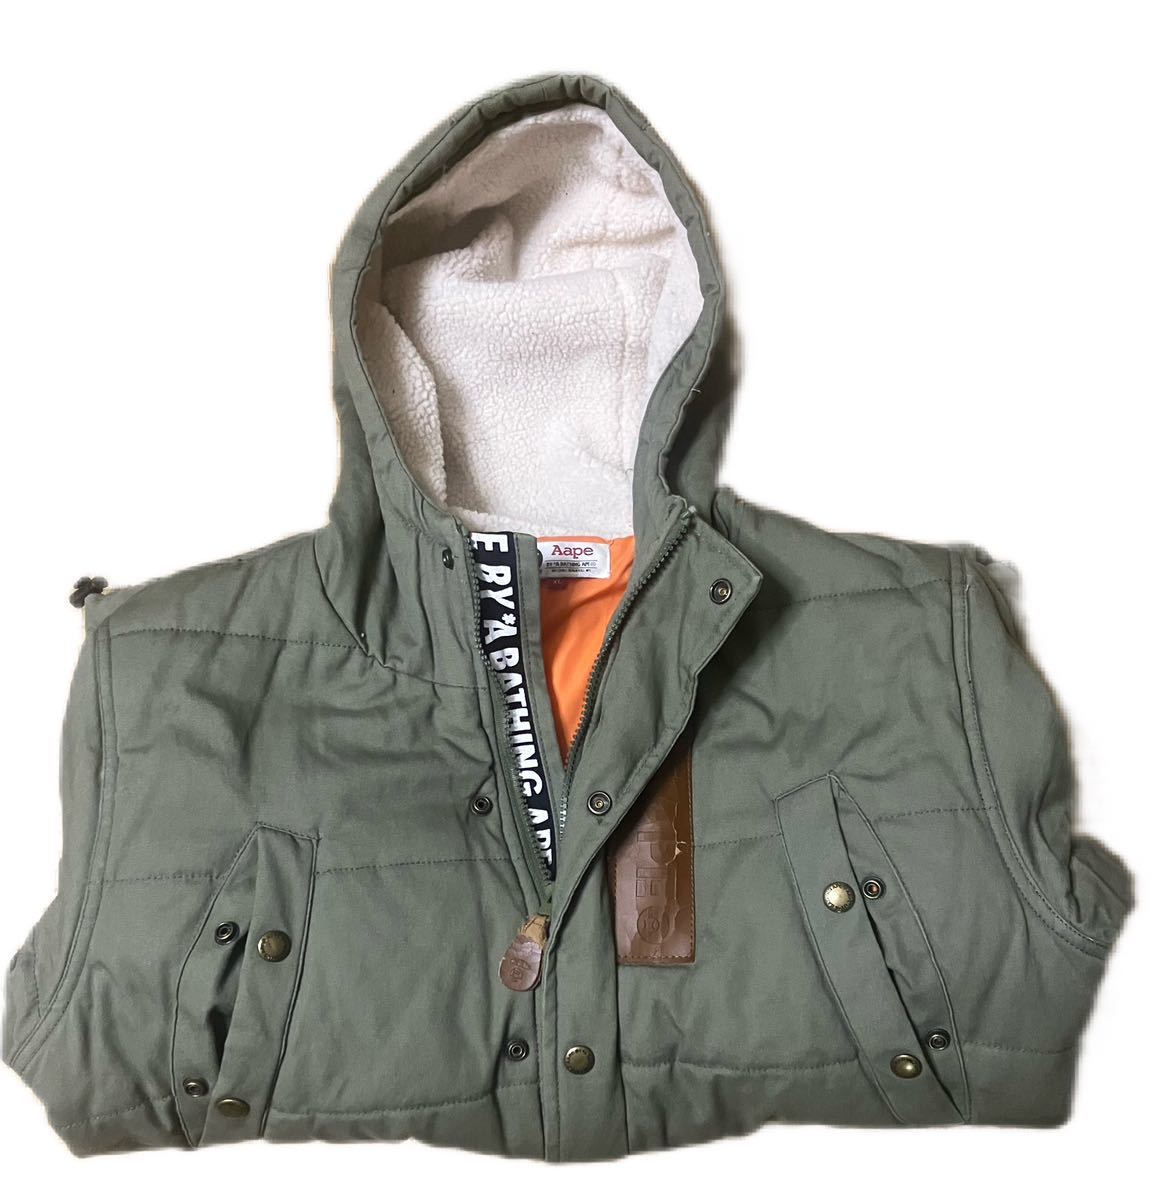 [ ultra rare ]APE Ape down jacket XL size 